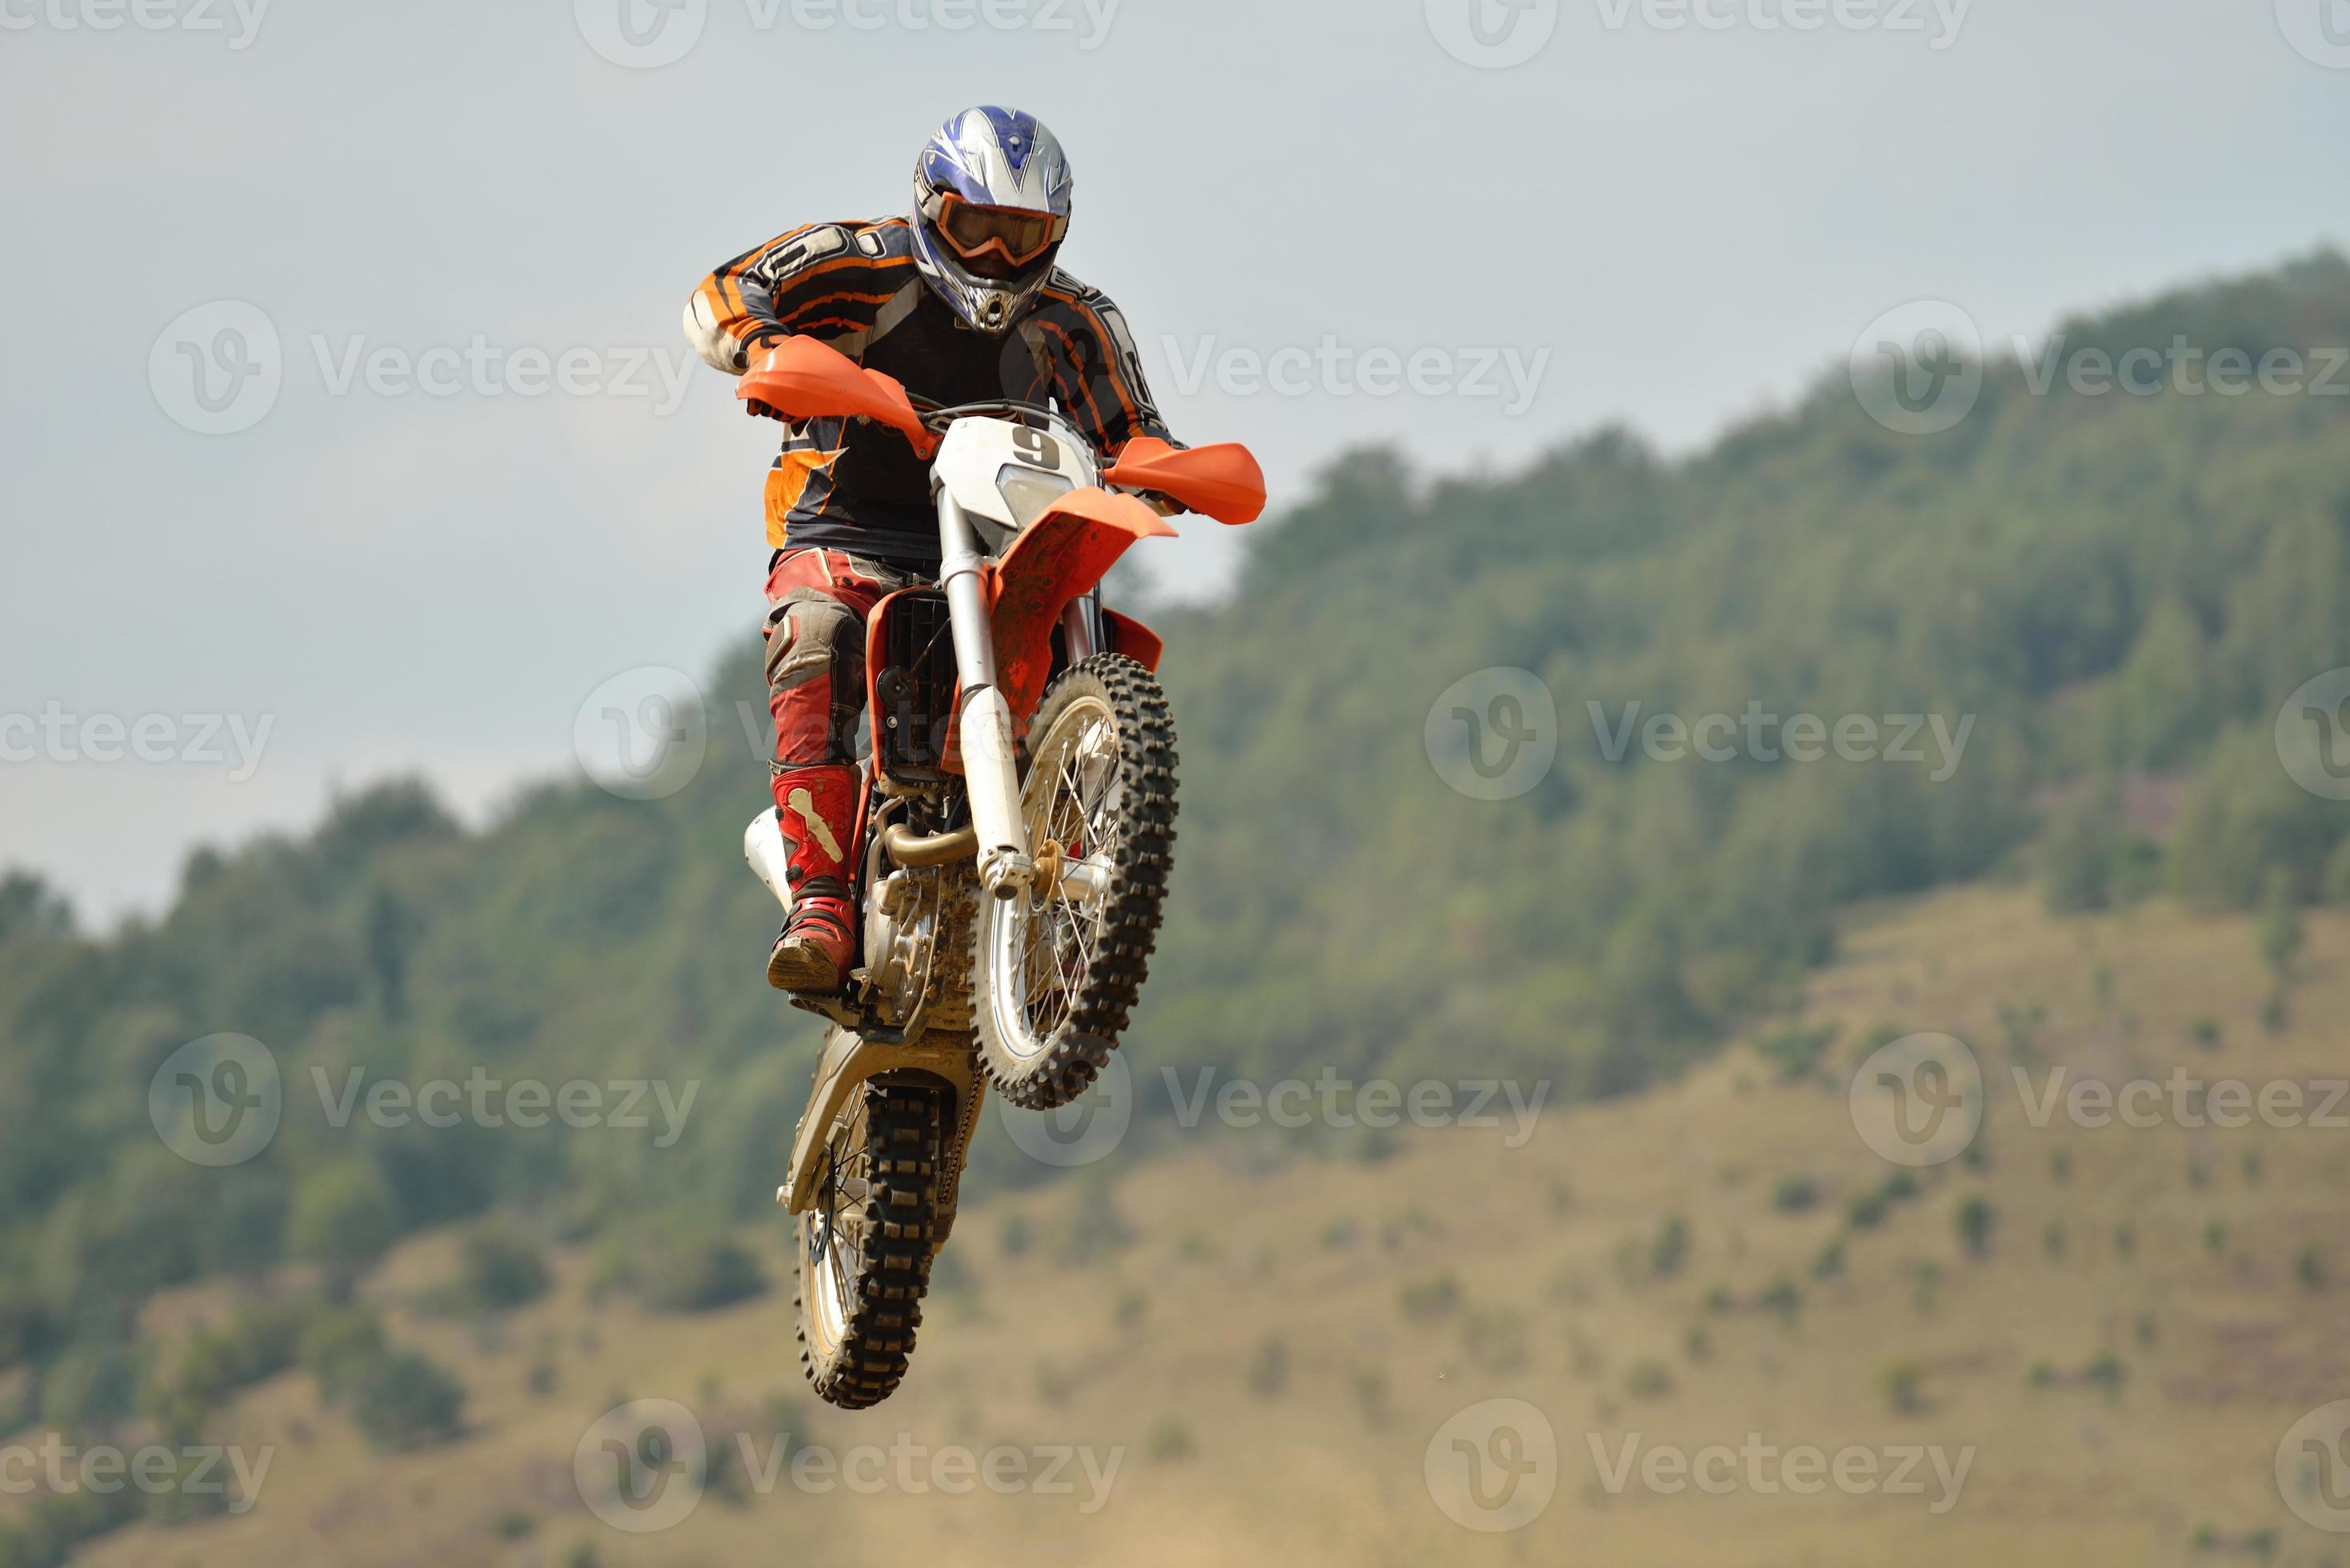 corrida de motocross 11575838 Foto de stock no Vecteezy